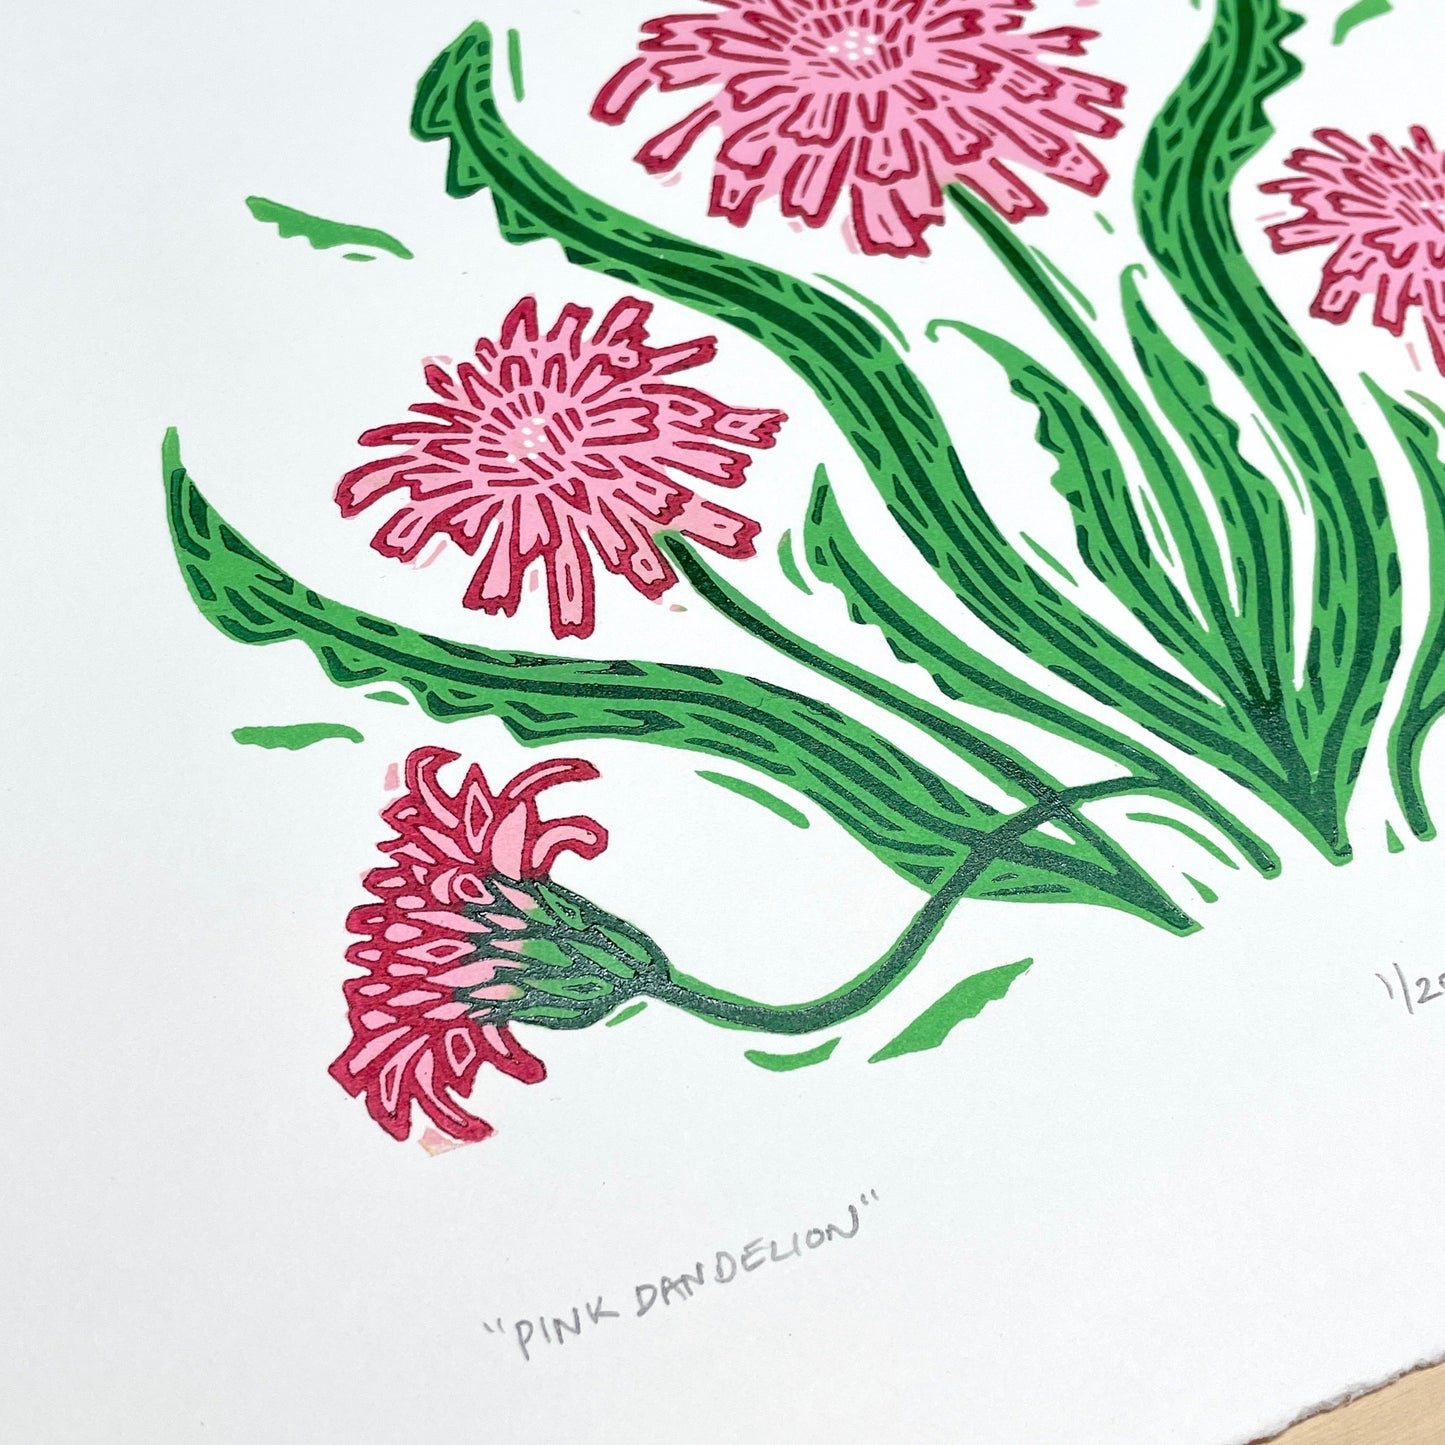 Pink Dandelion FRAMED - woodblock print (11x14")